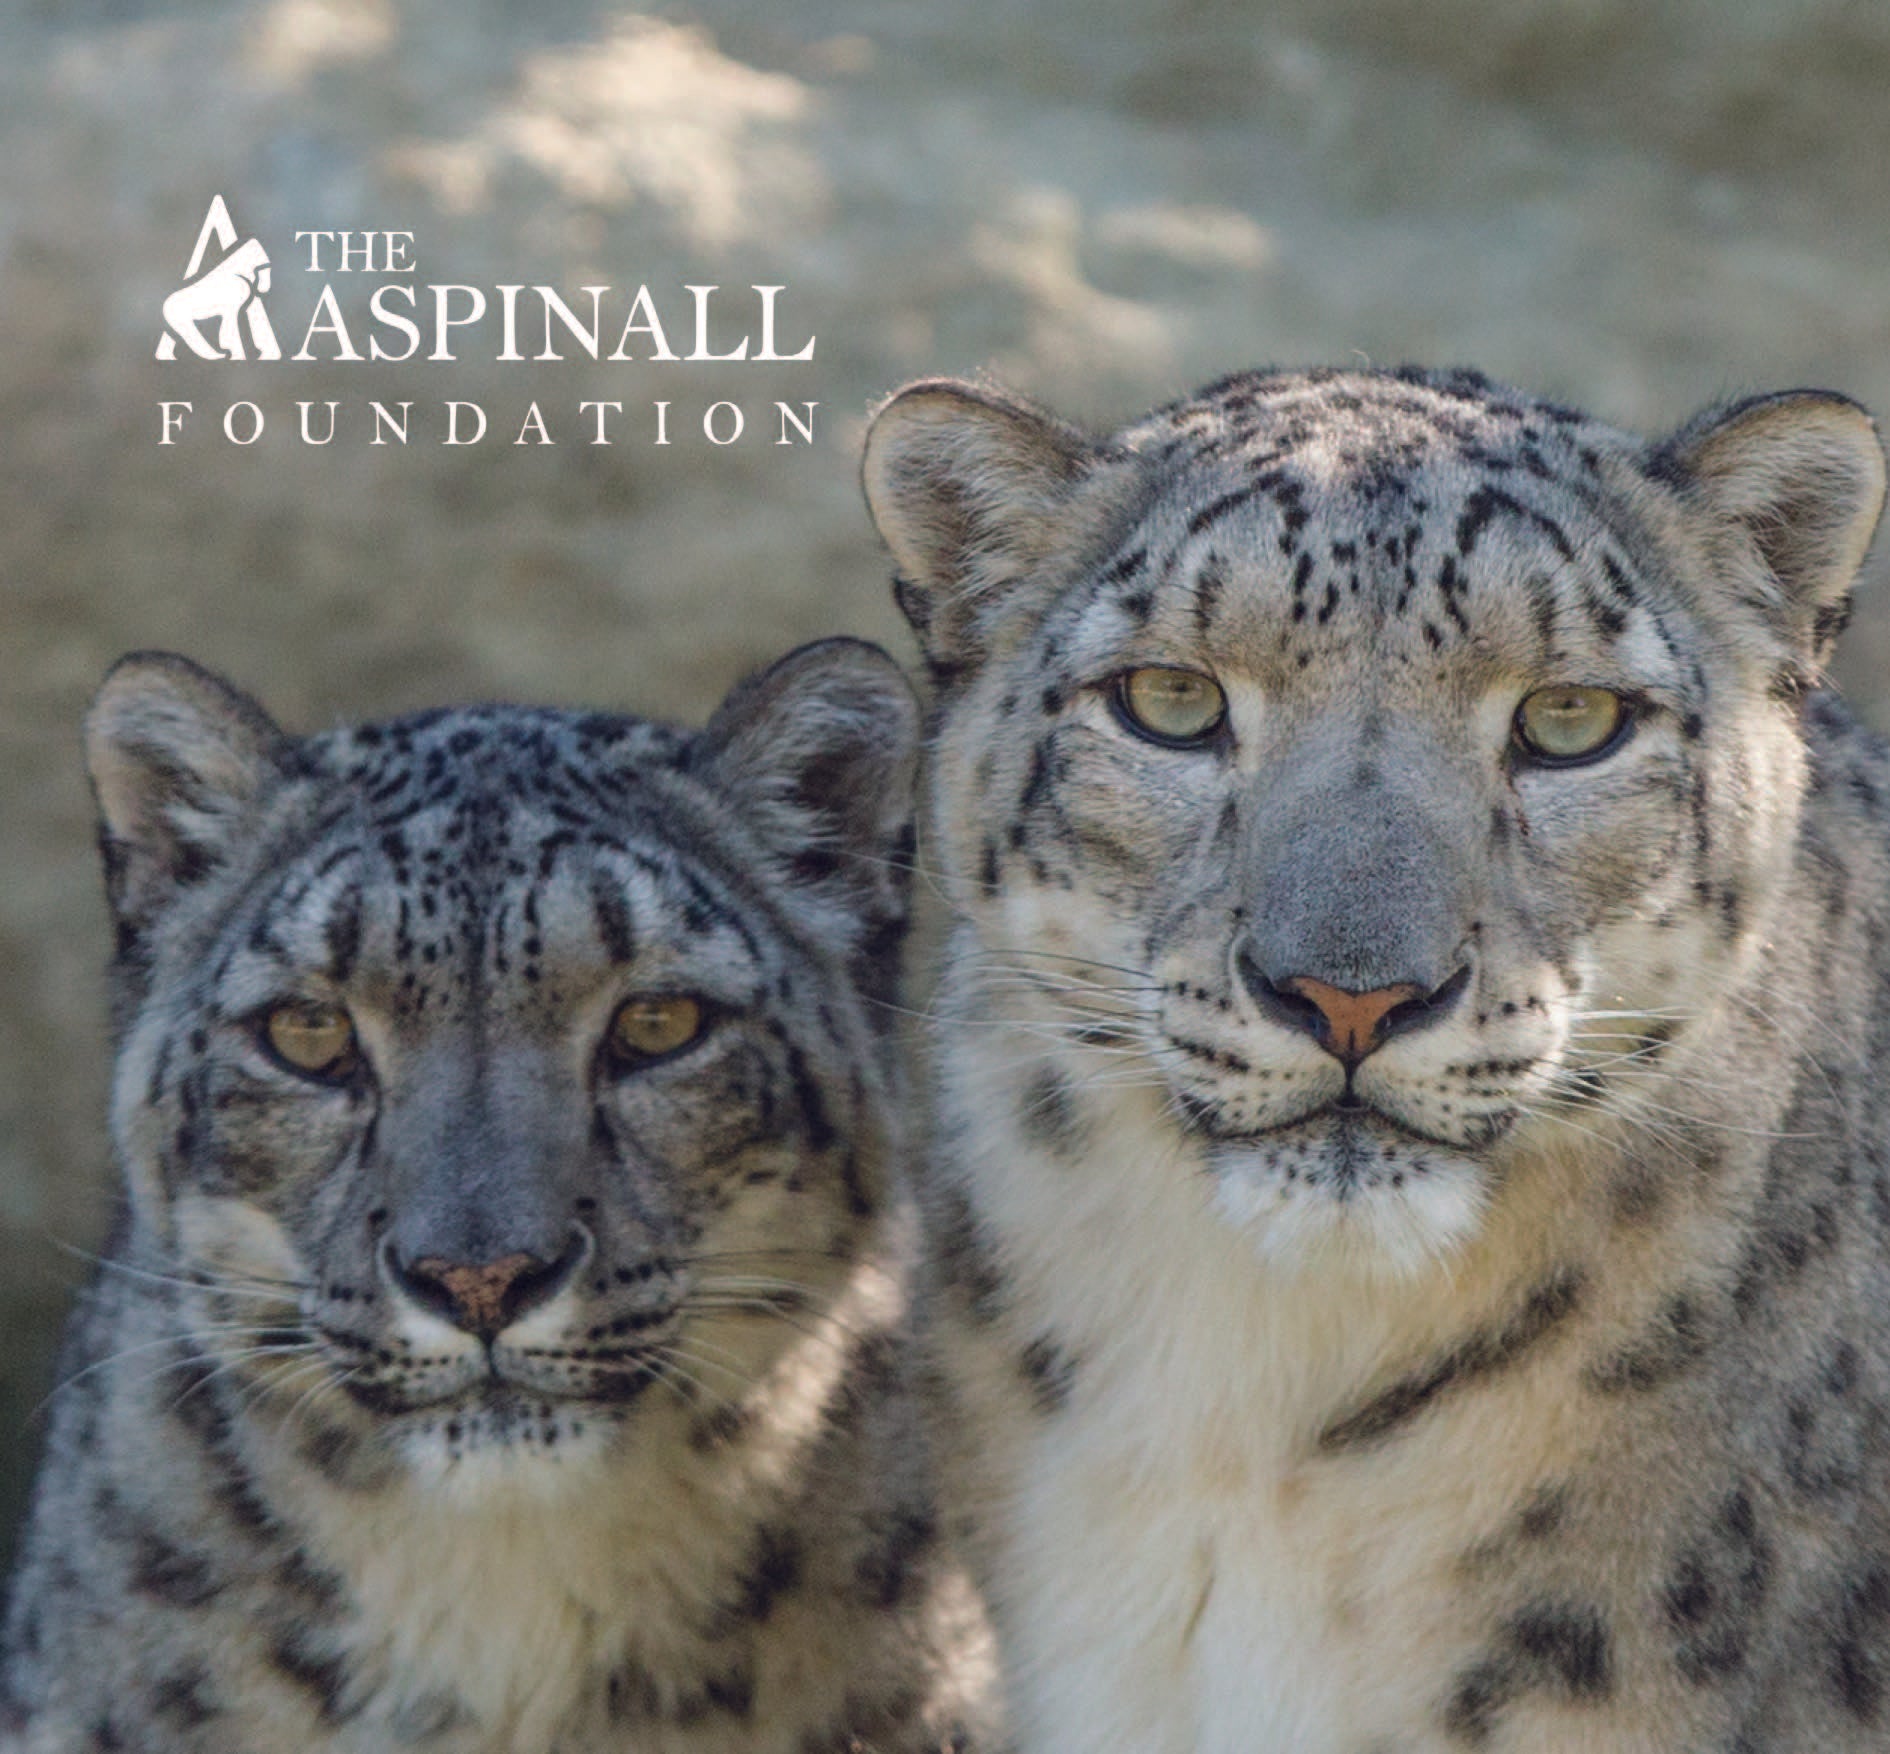 Adopt Ziva & Nuri the Snow Leopards